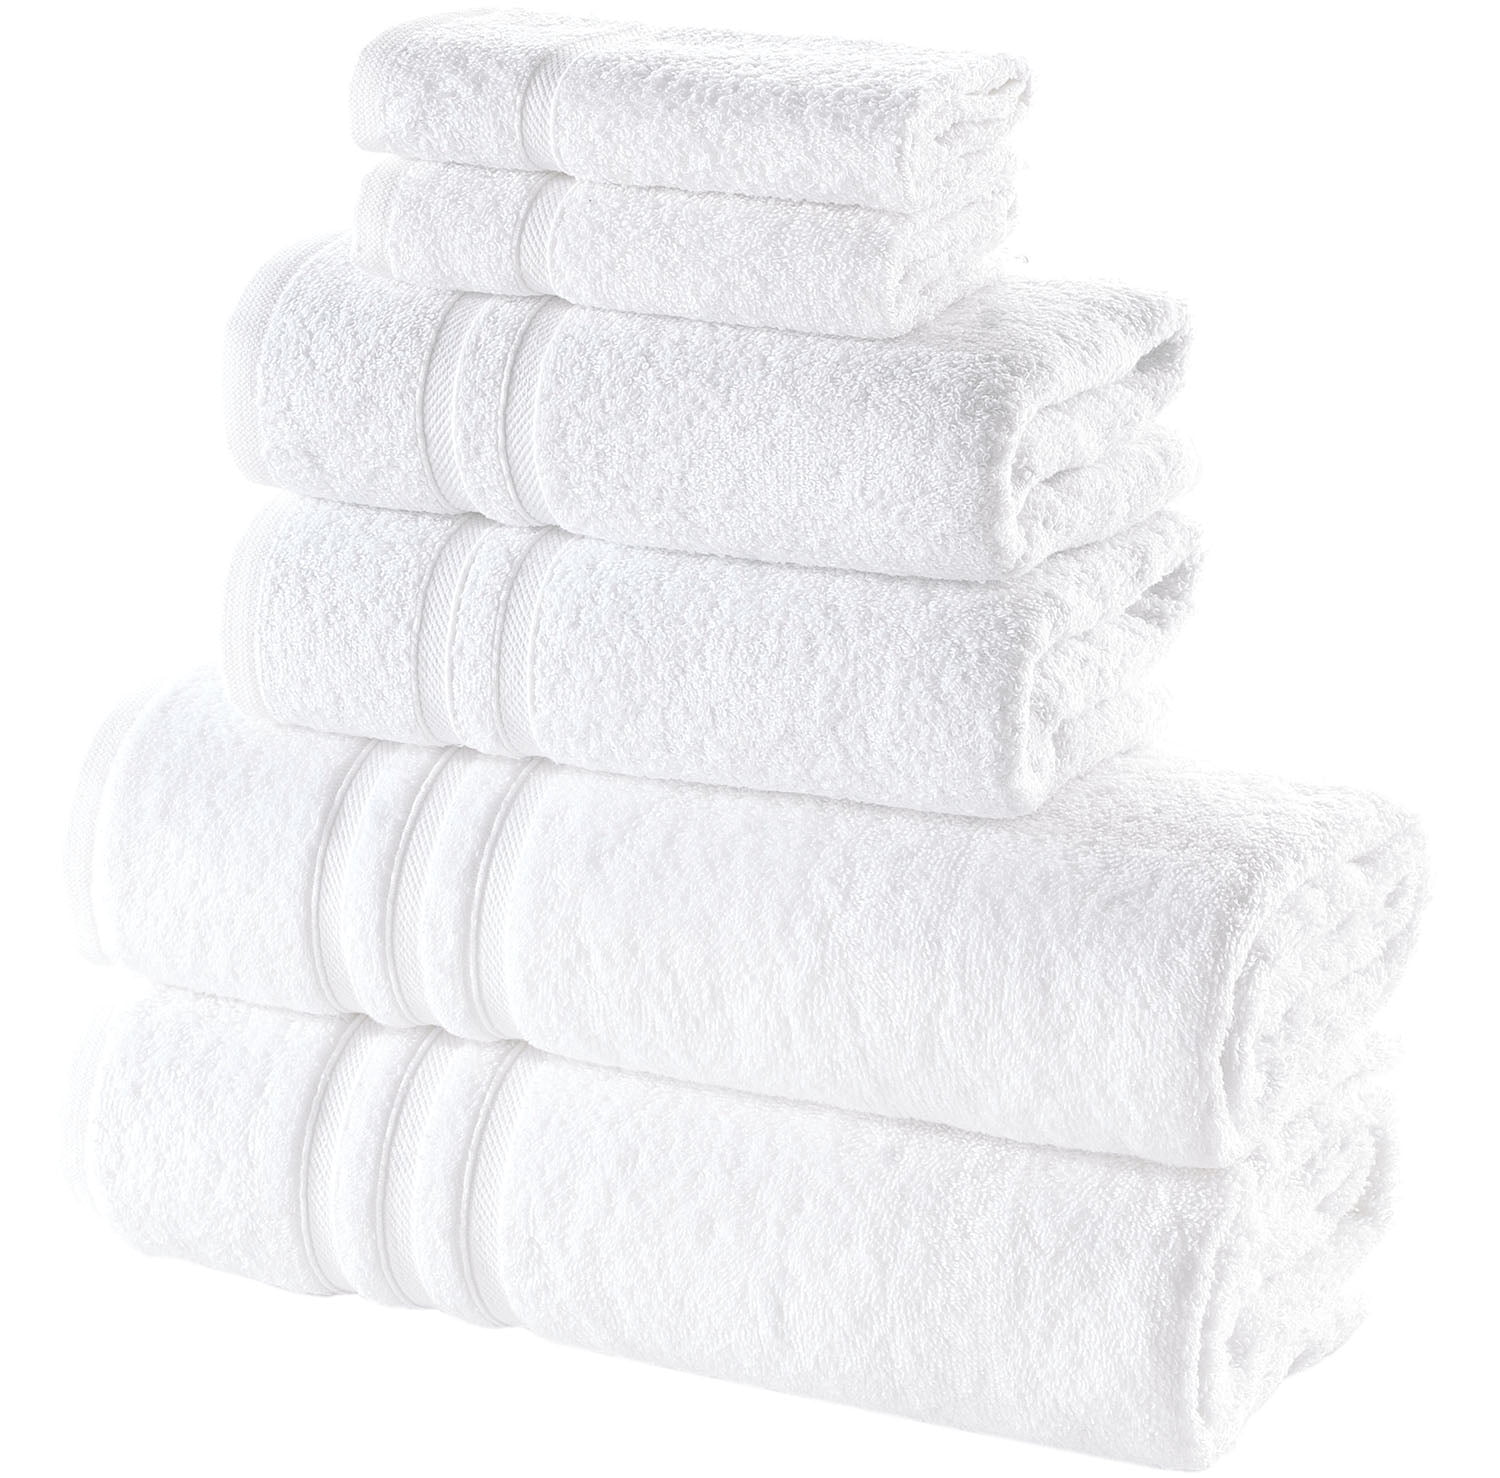 Hammam Linen Purple Bath Towels Set 6-Piece Original Turkish Cotton Soft,  Absorbent and Premium Towel for Bathroom and Kitchen 2 Bath Towels, 2 Hand  Towels, 2 Washcloths 